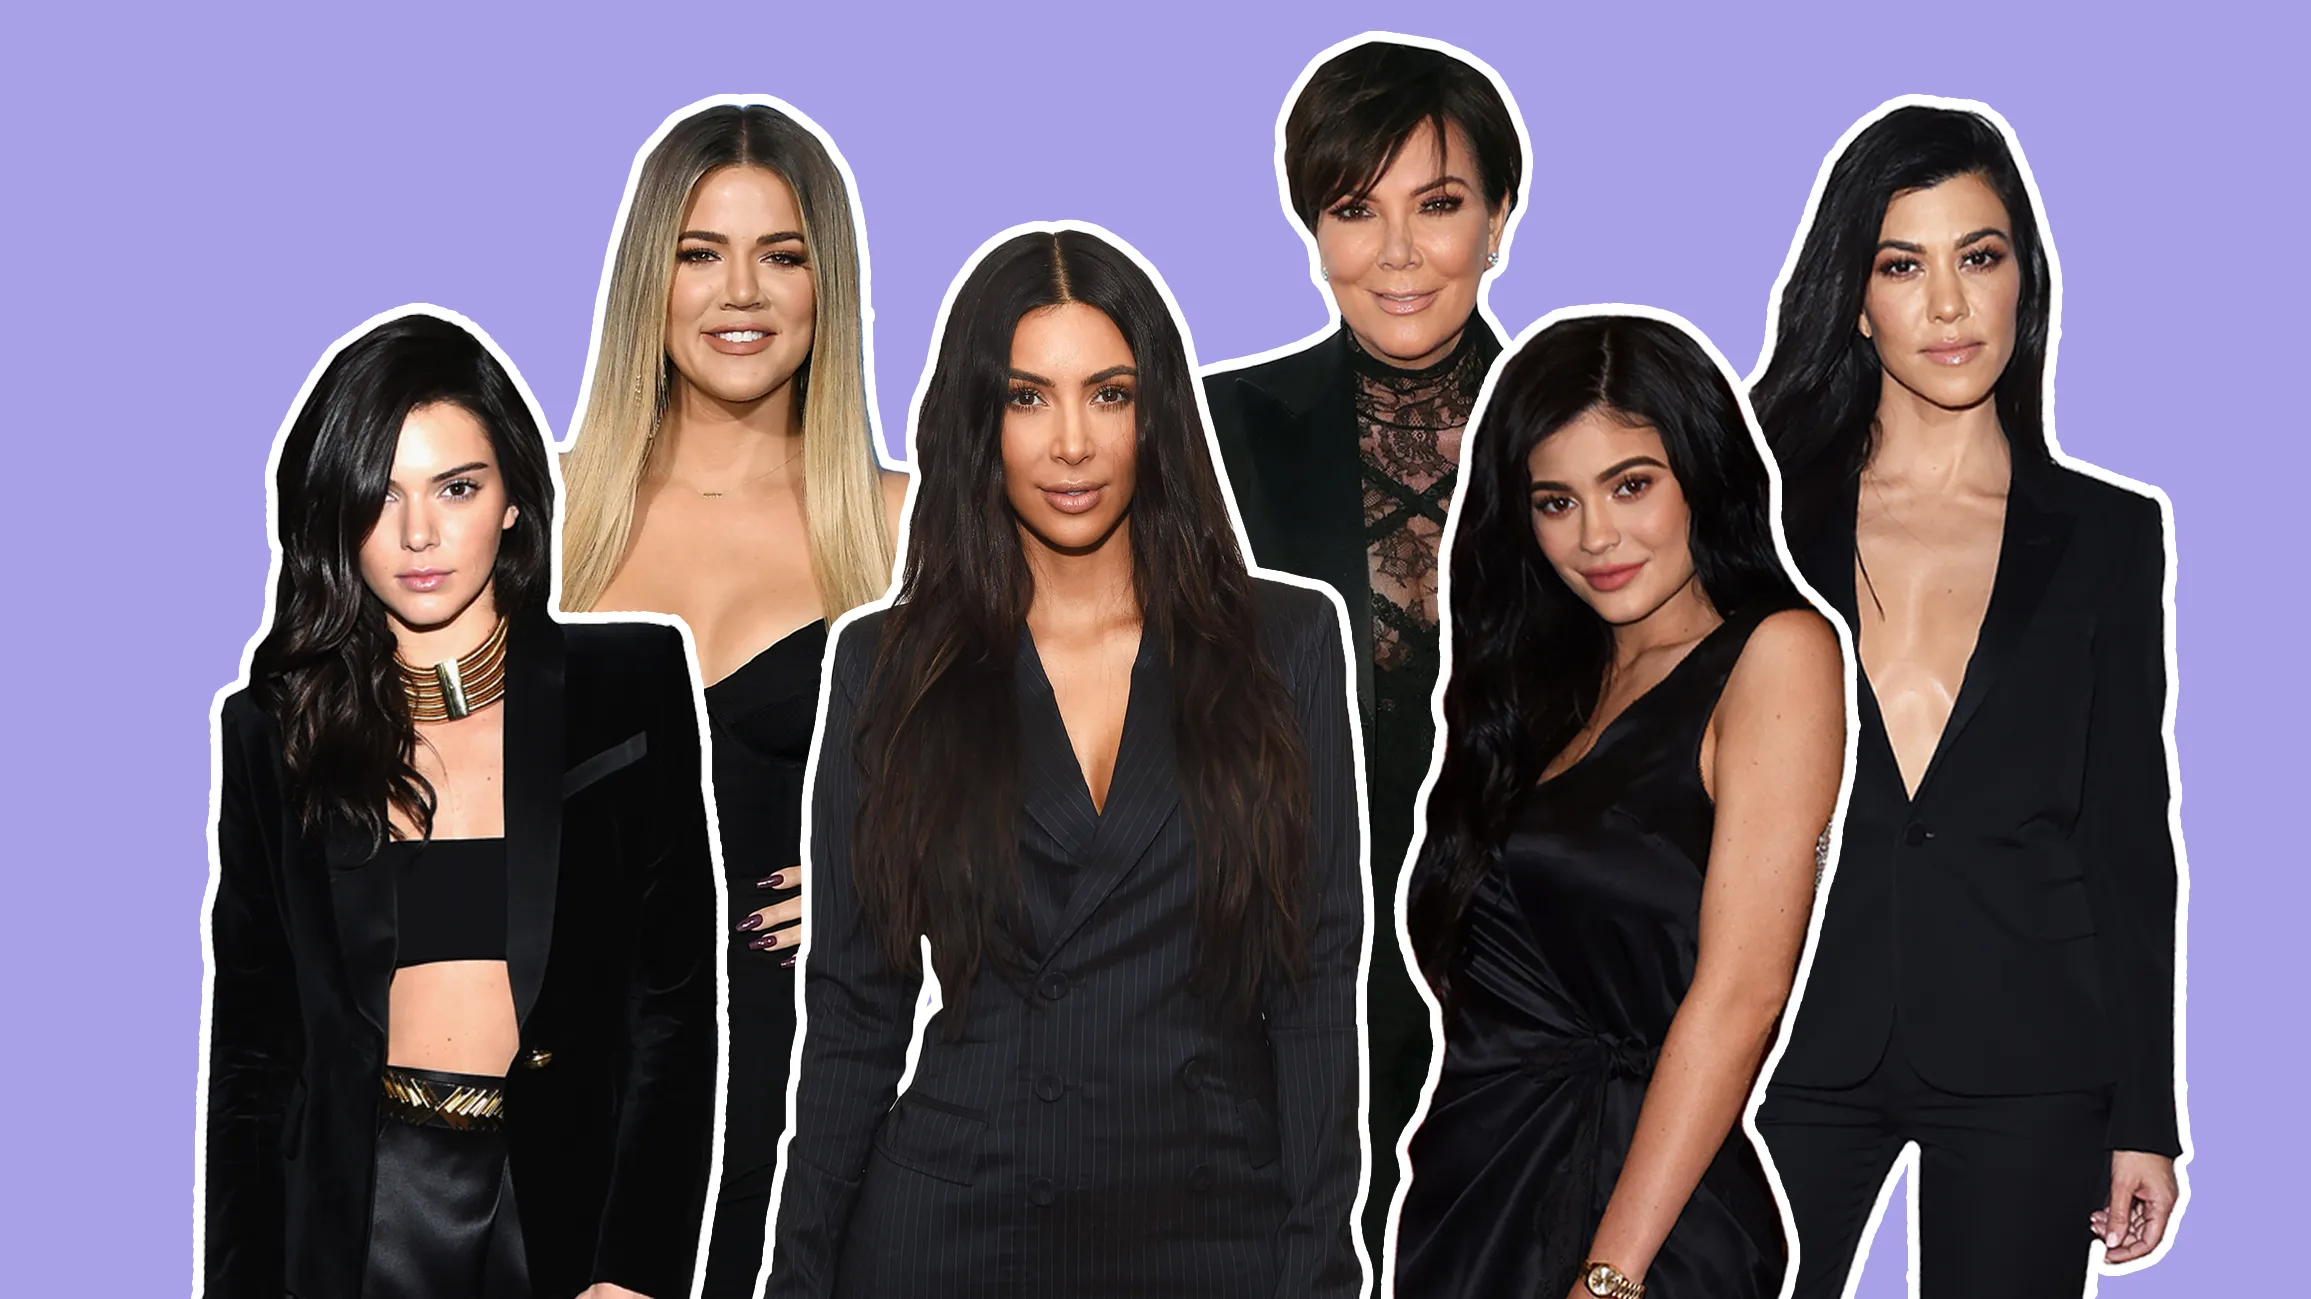 Kim Kardashian is so rich, she's wearing money these days